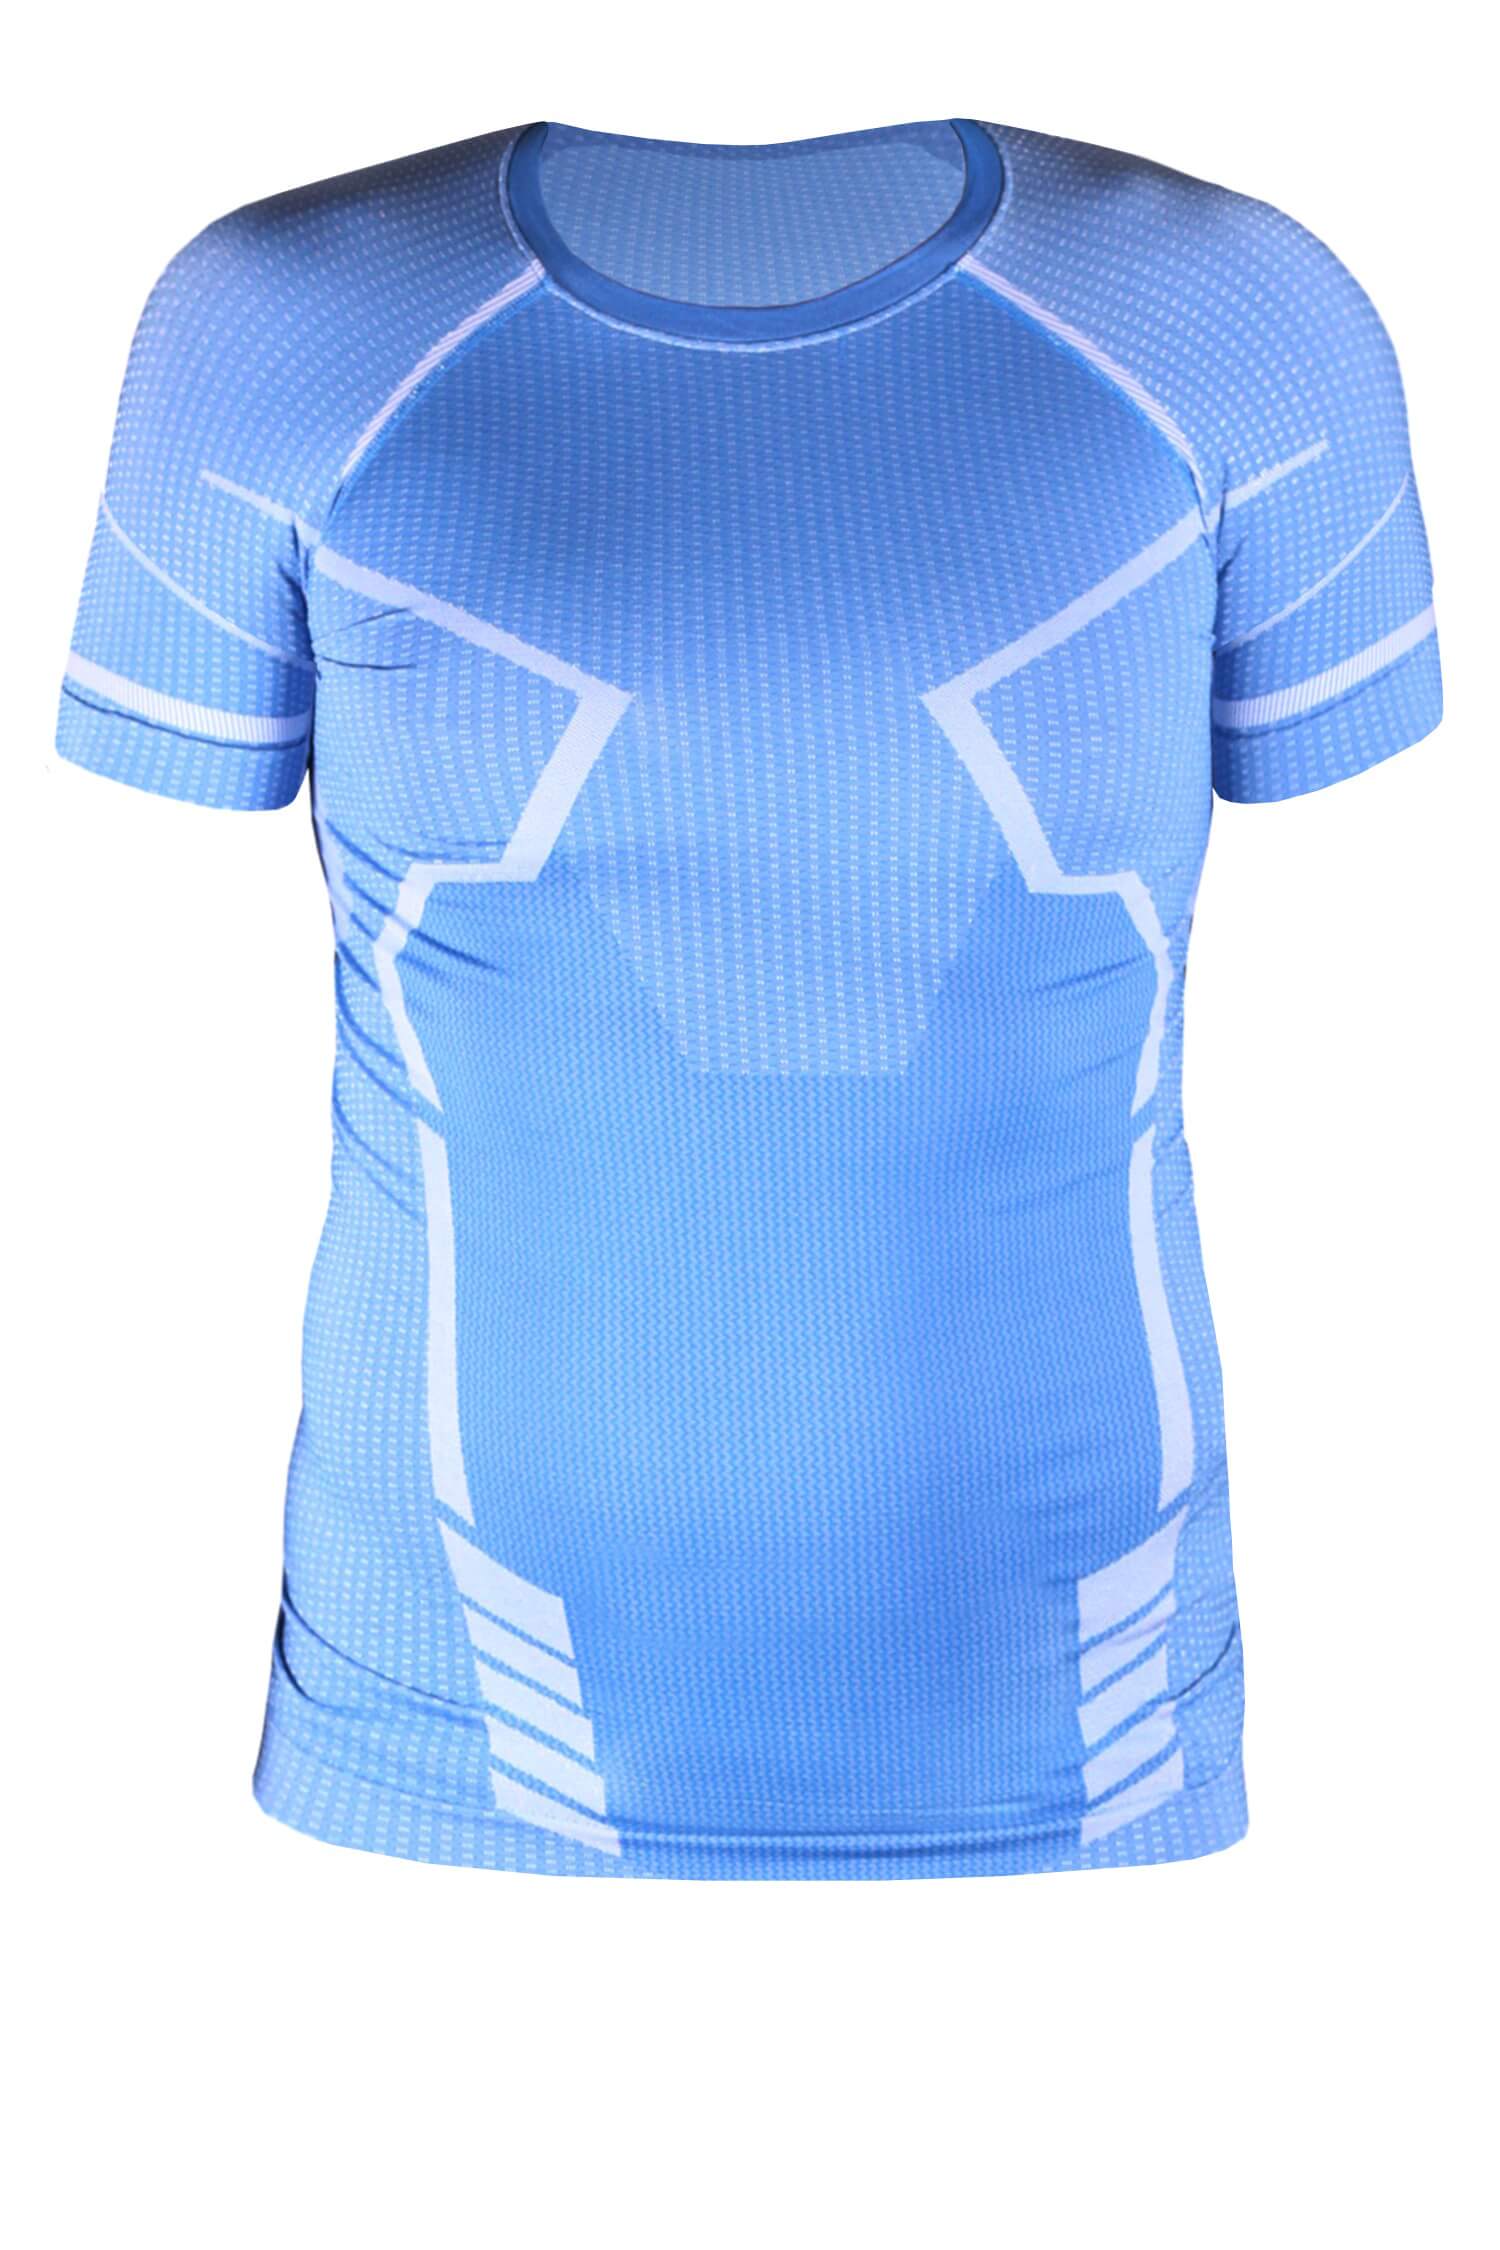 Ariste pánské thermo tričko sport 4675 L modrá